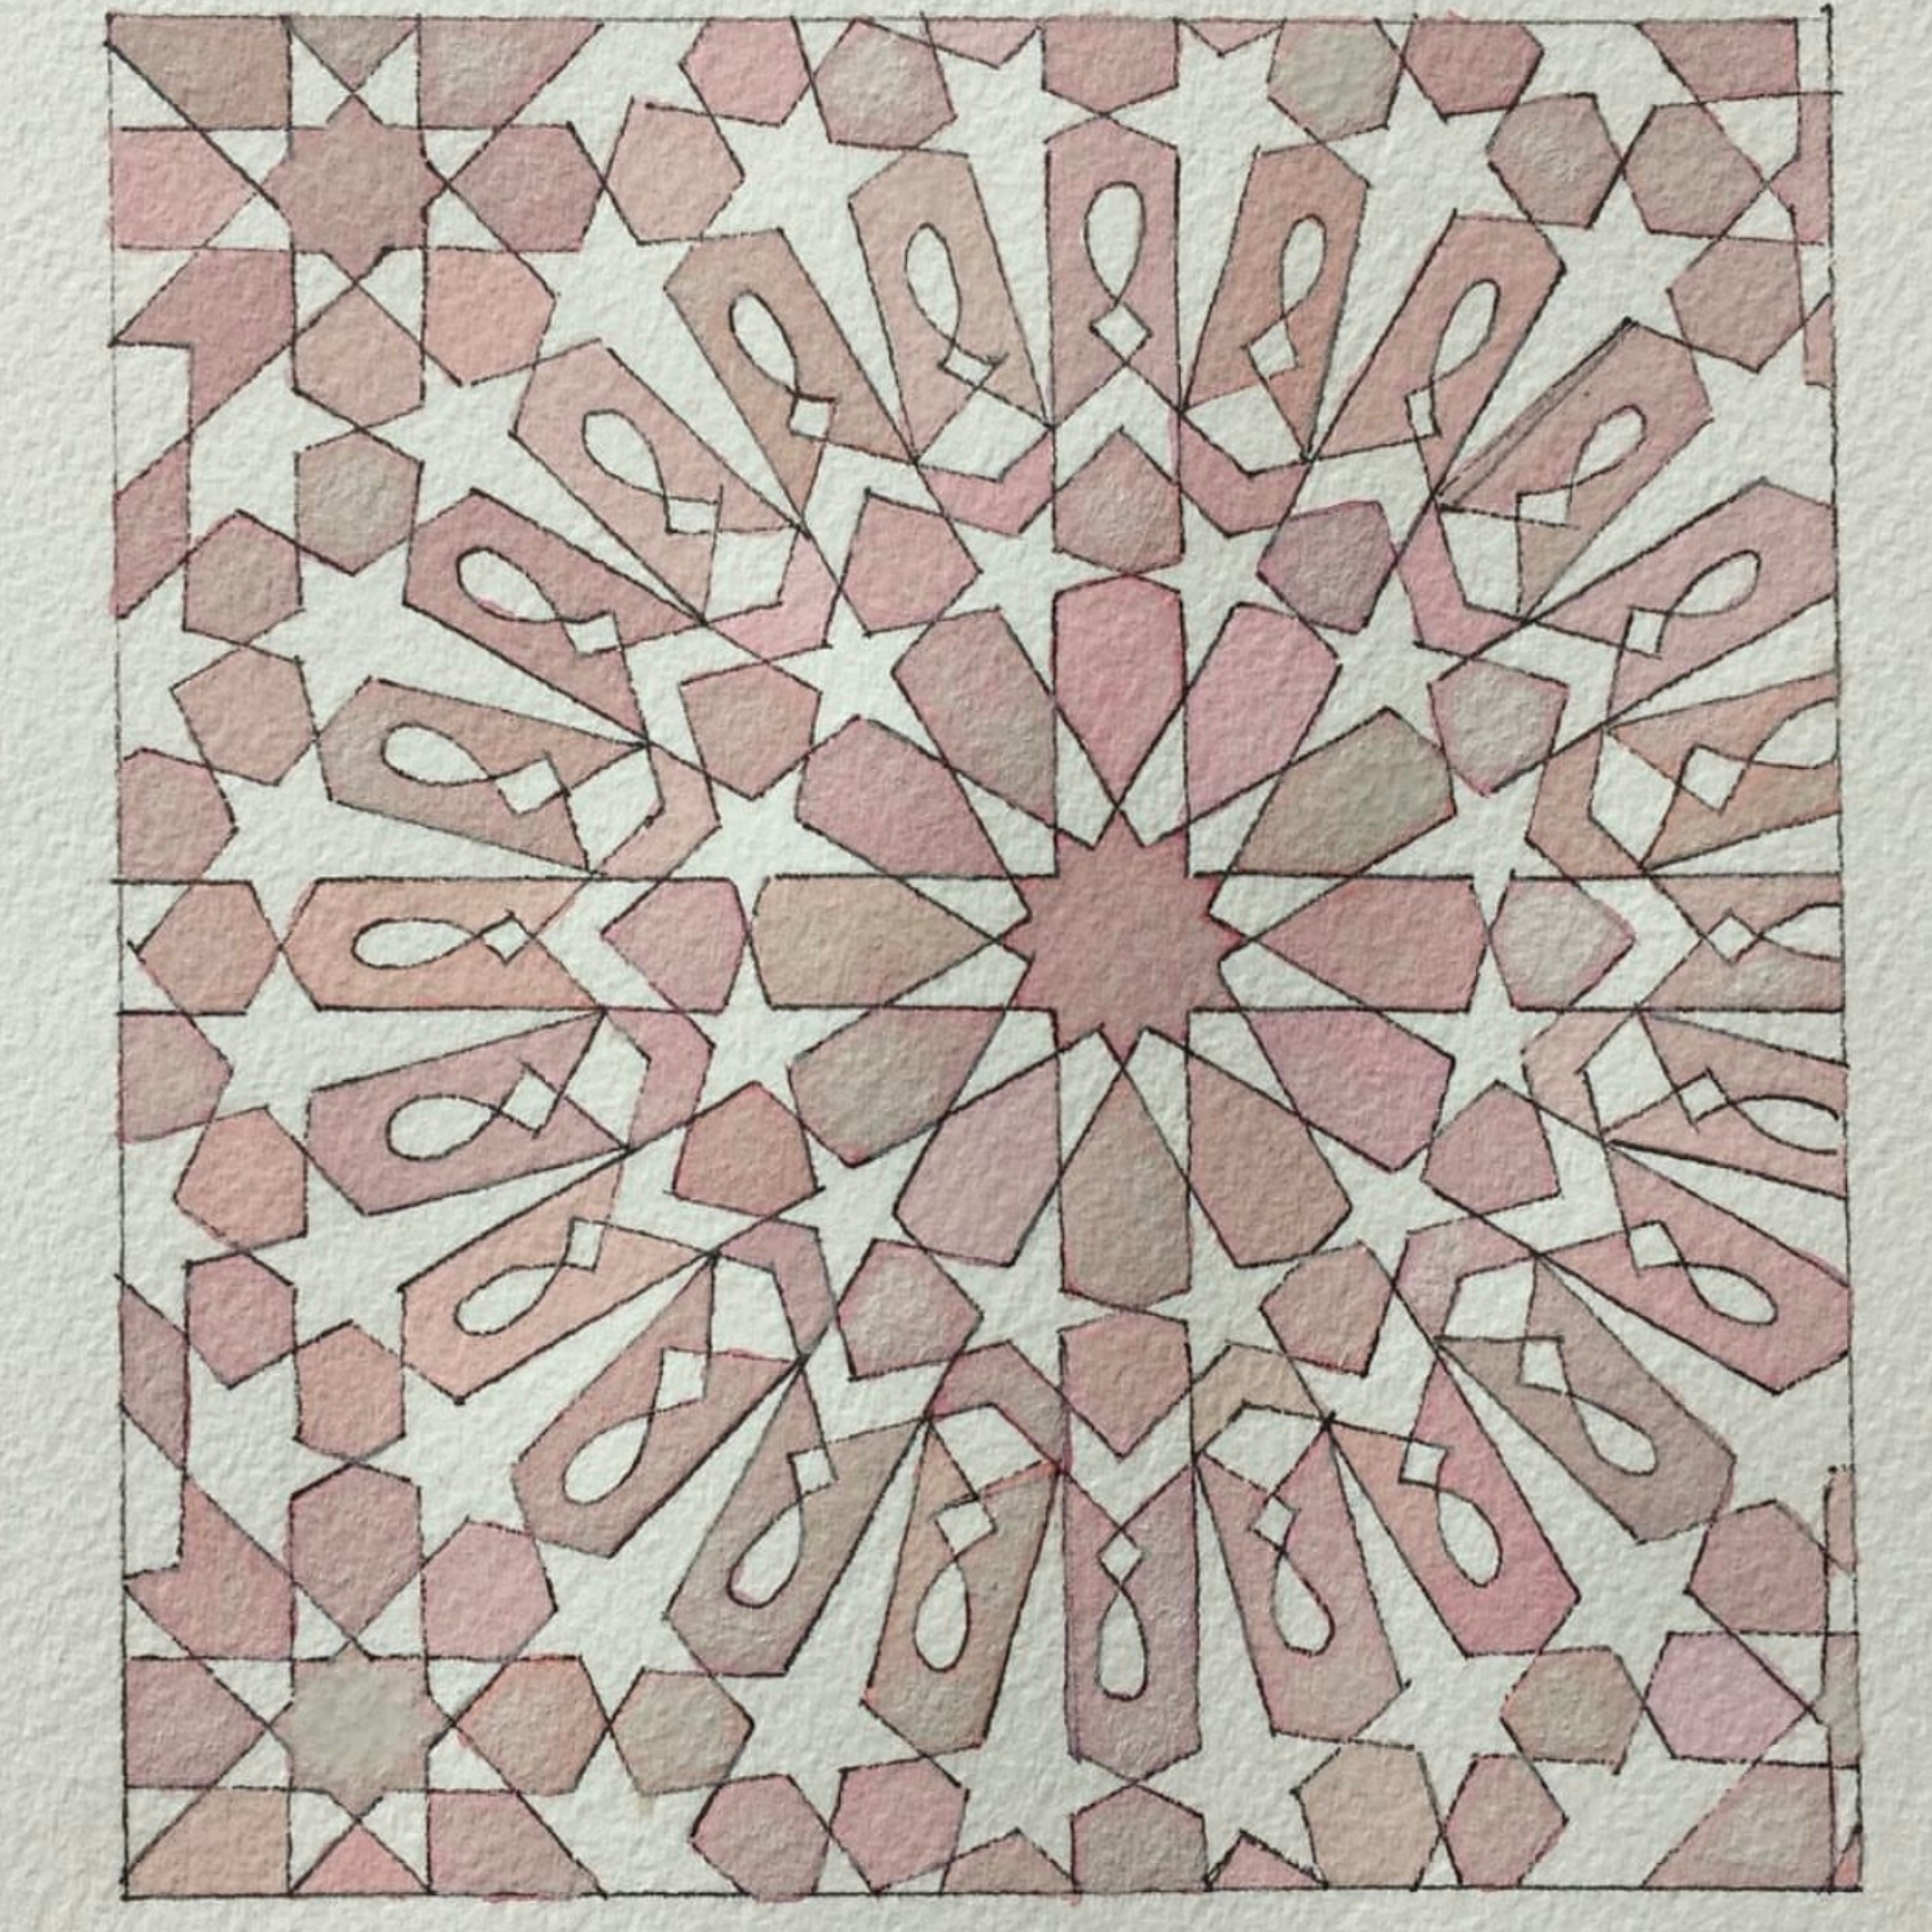 Watercolour Painting: Islamic Geometry